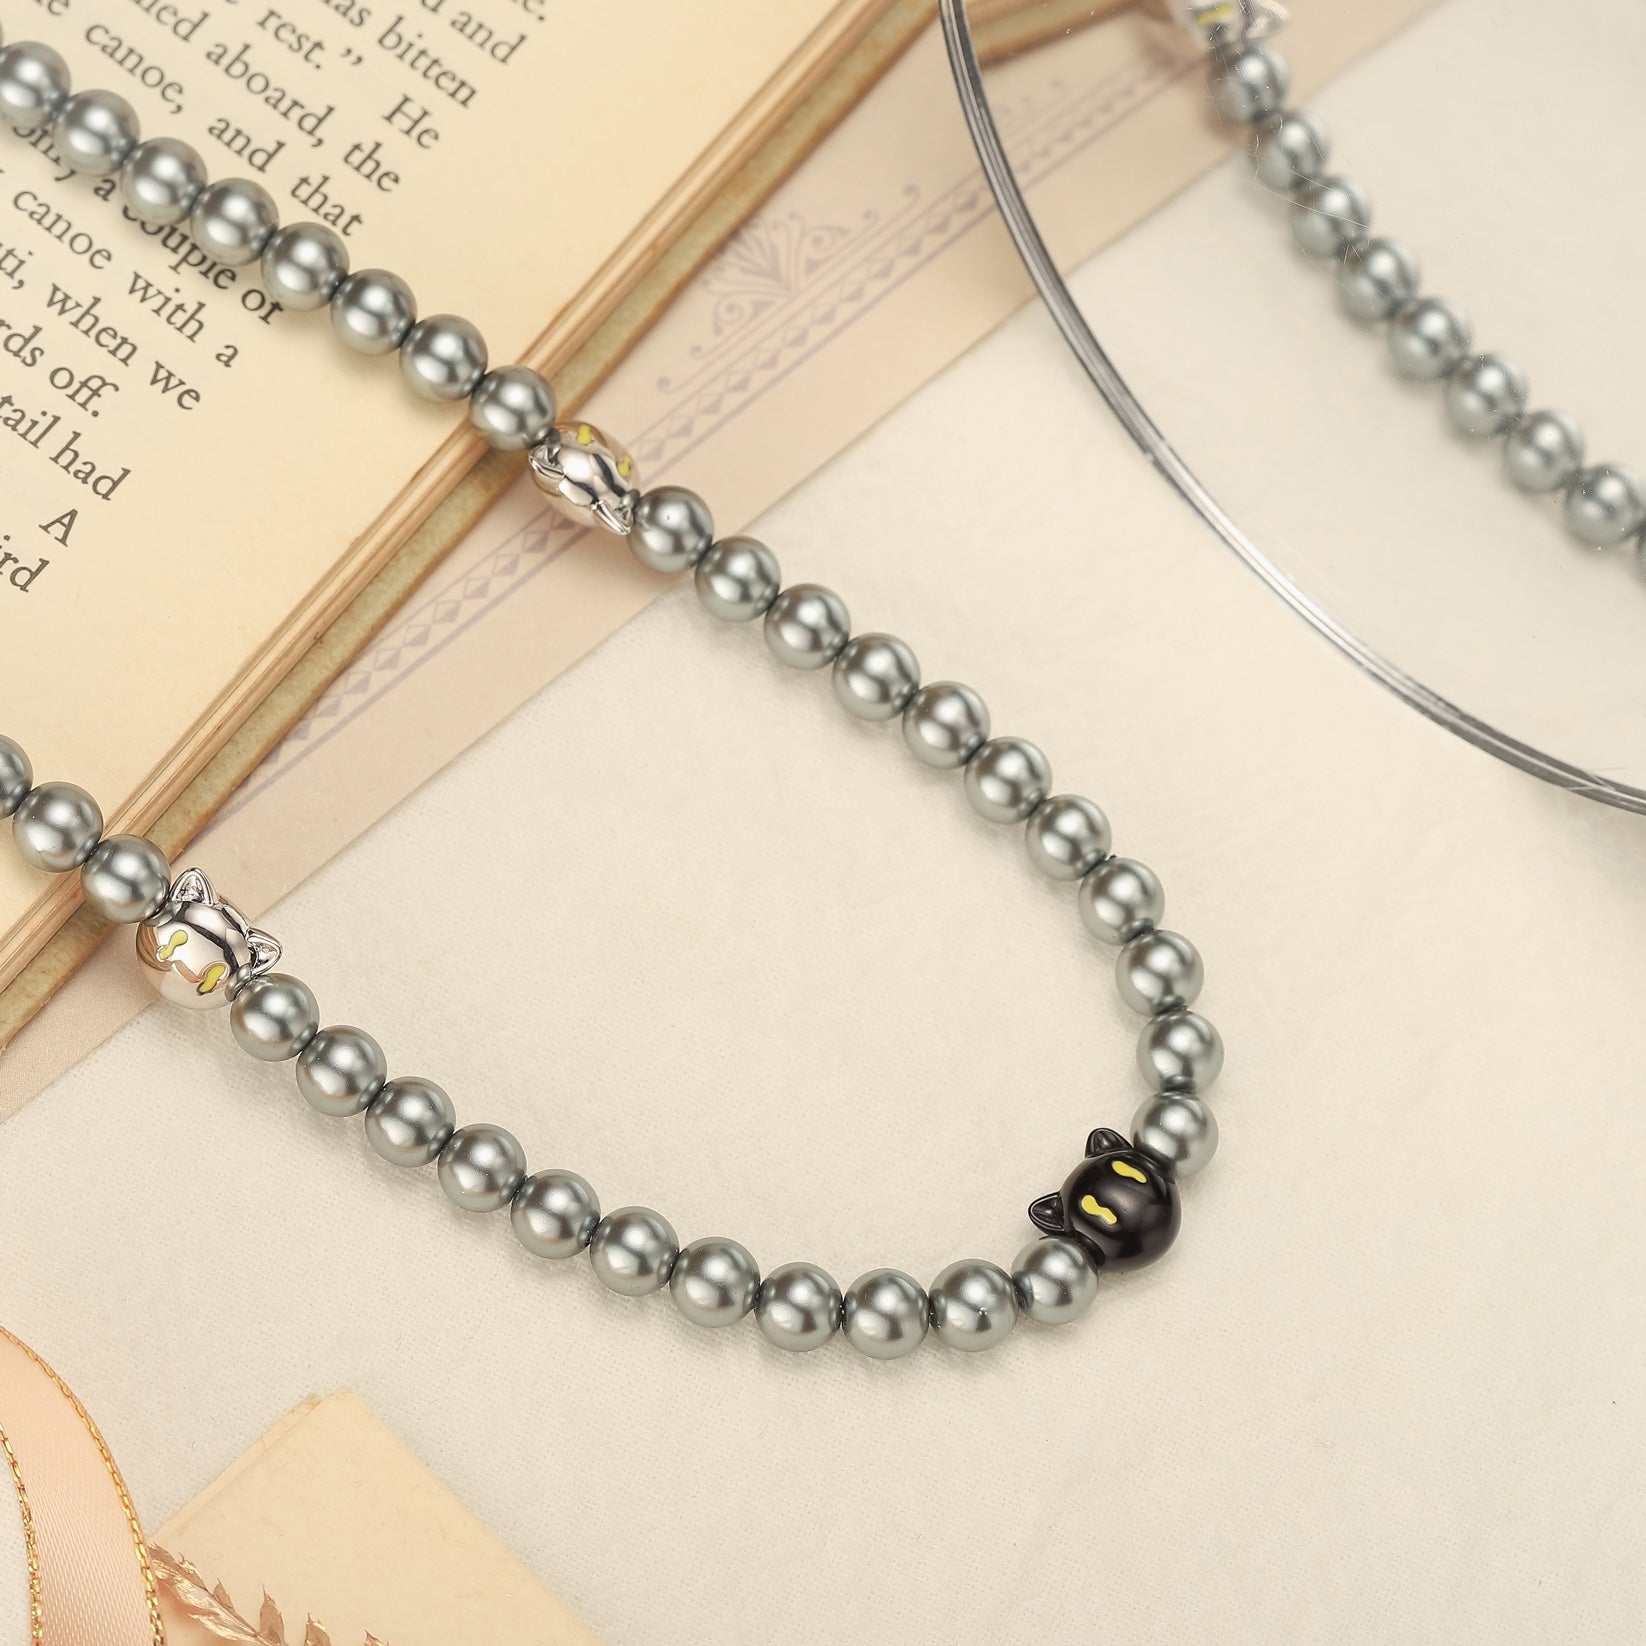 Cute Black Cat Beads Necklace